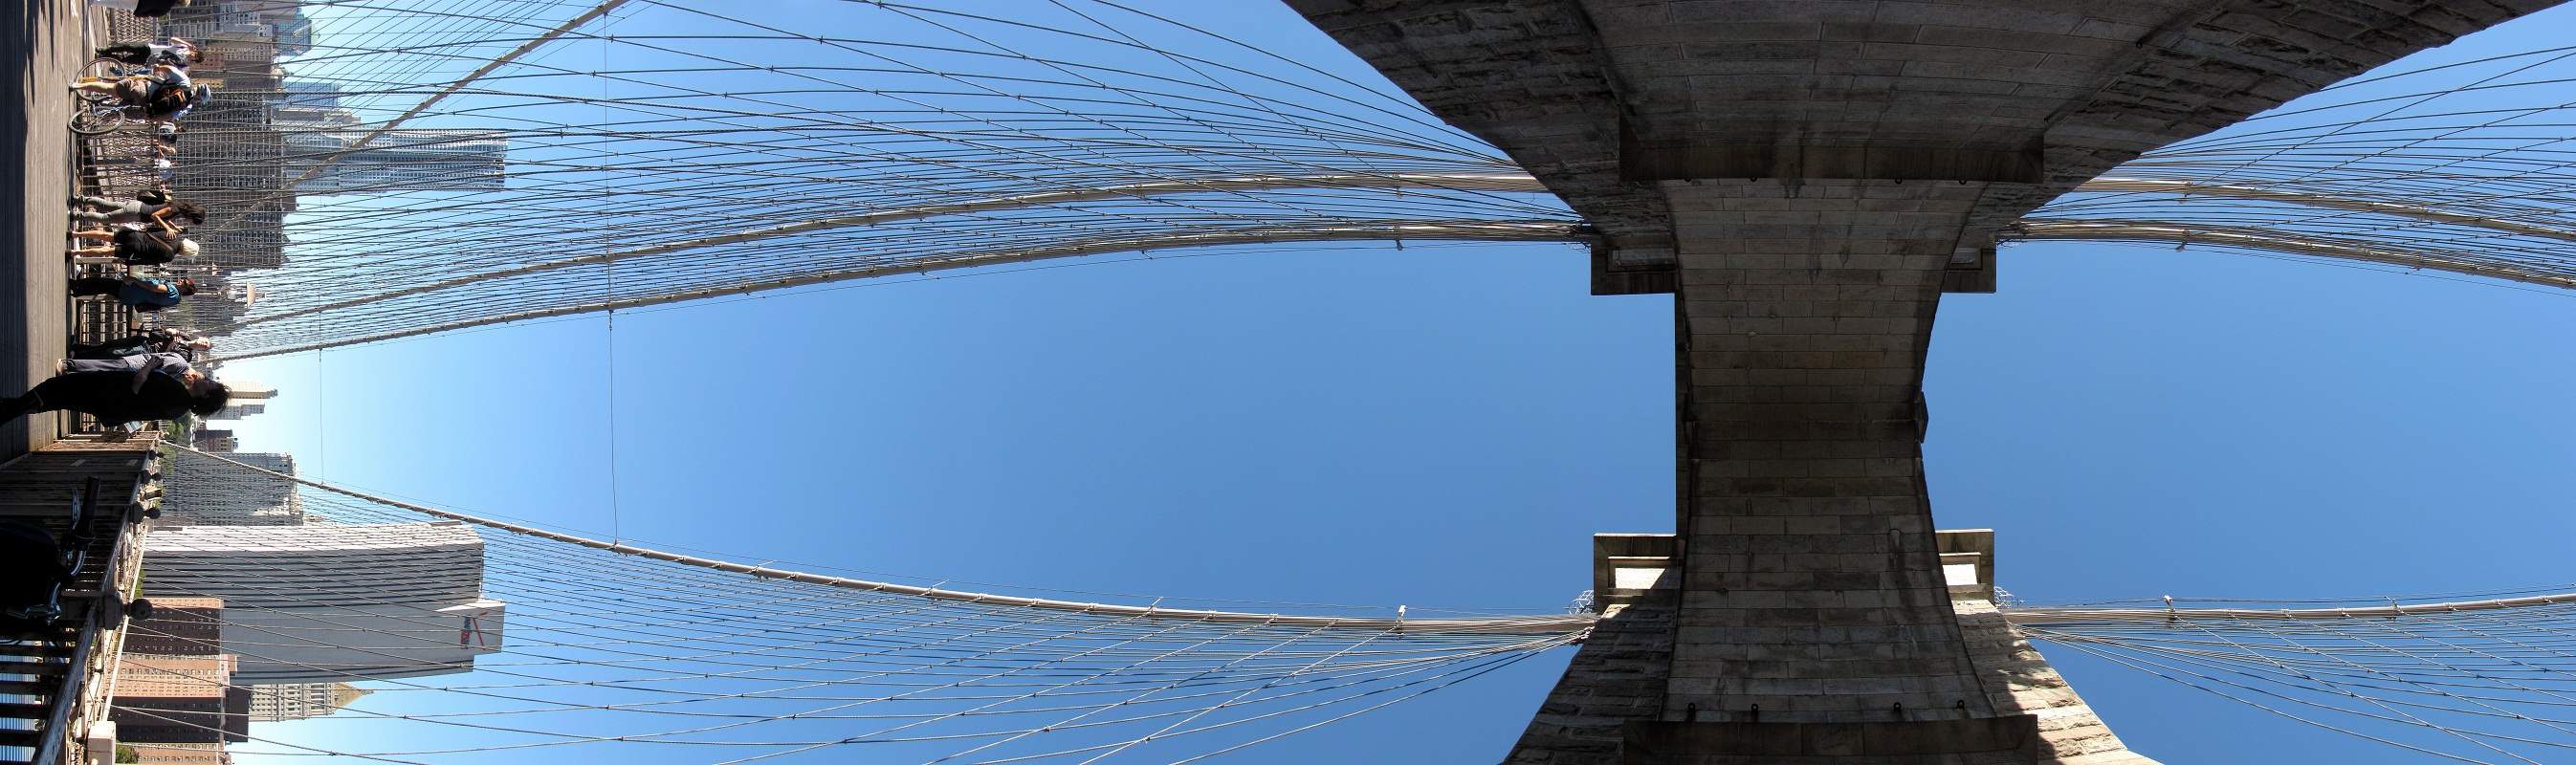 New York City - Brooklyn Bridge Panorama